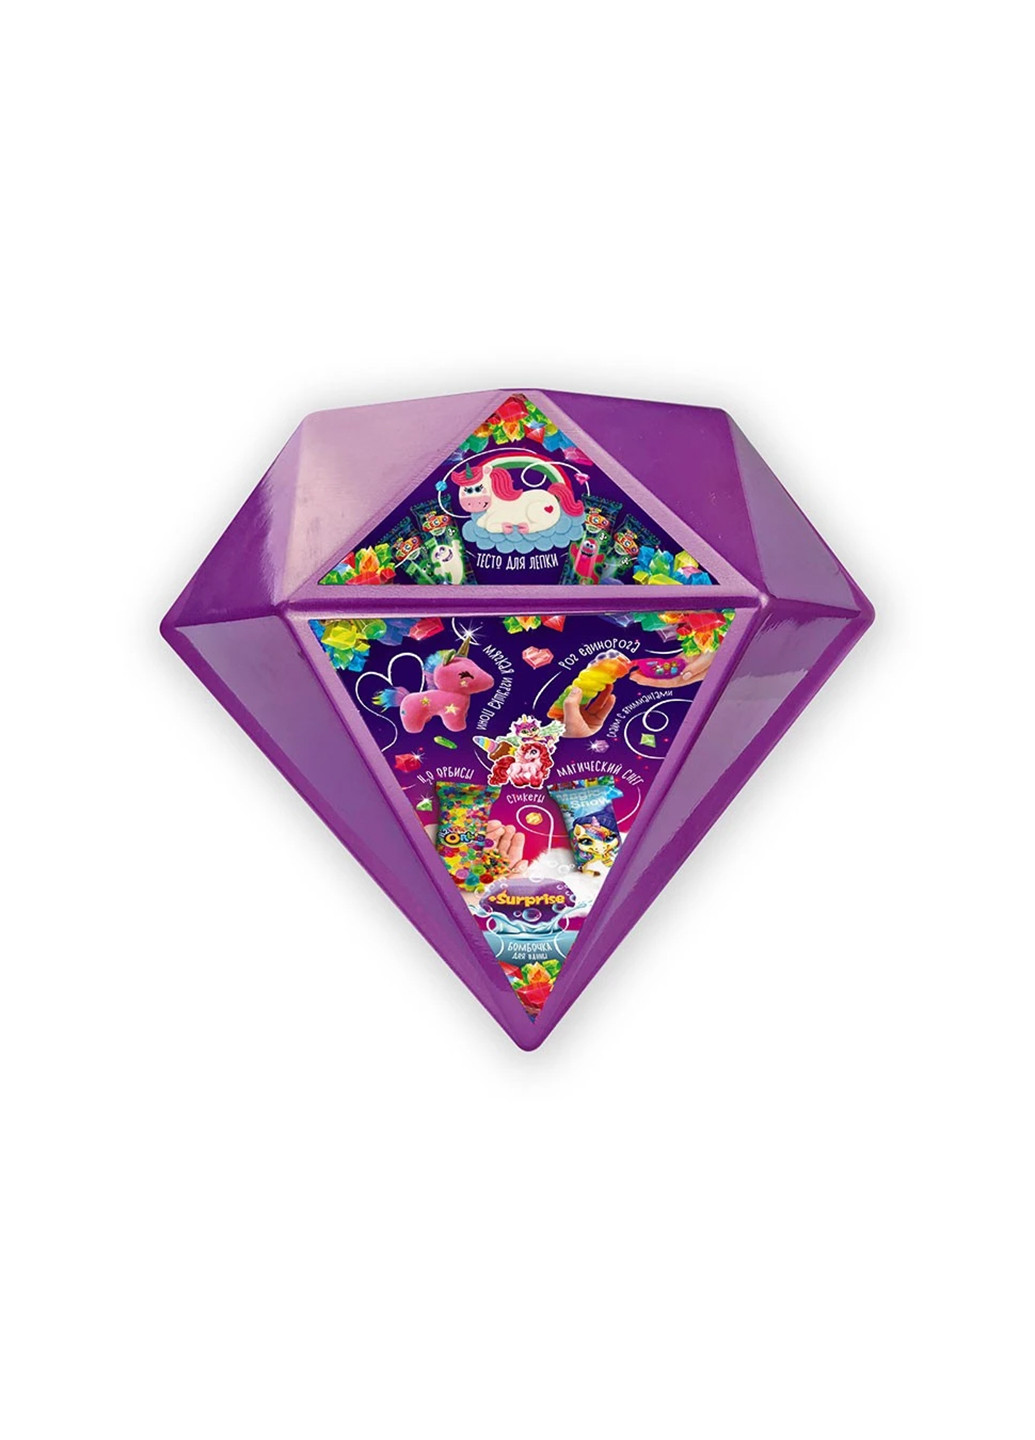 Креативное творчество Diamond Pony Danko Toys (257037385)